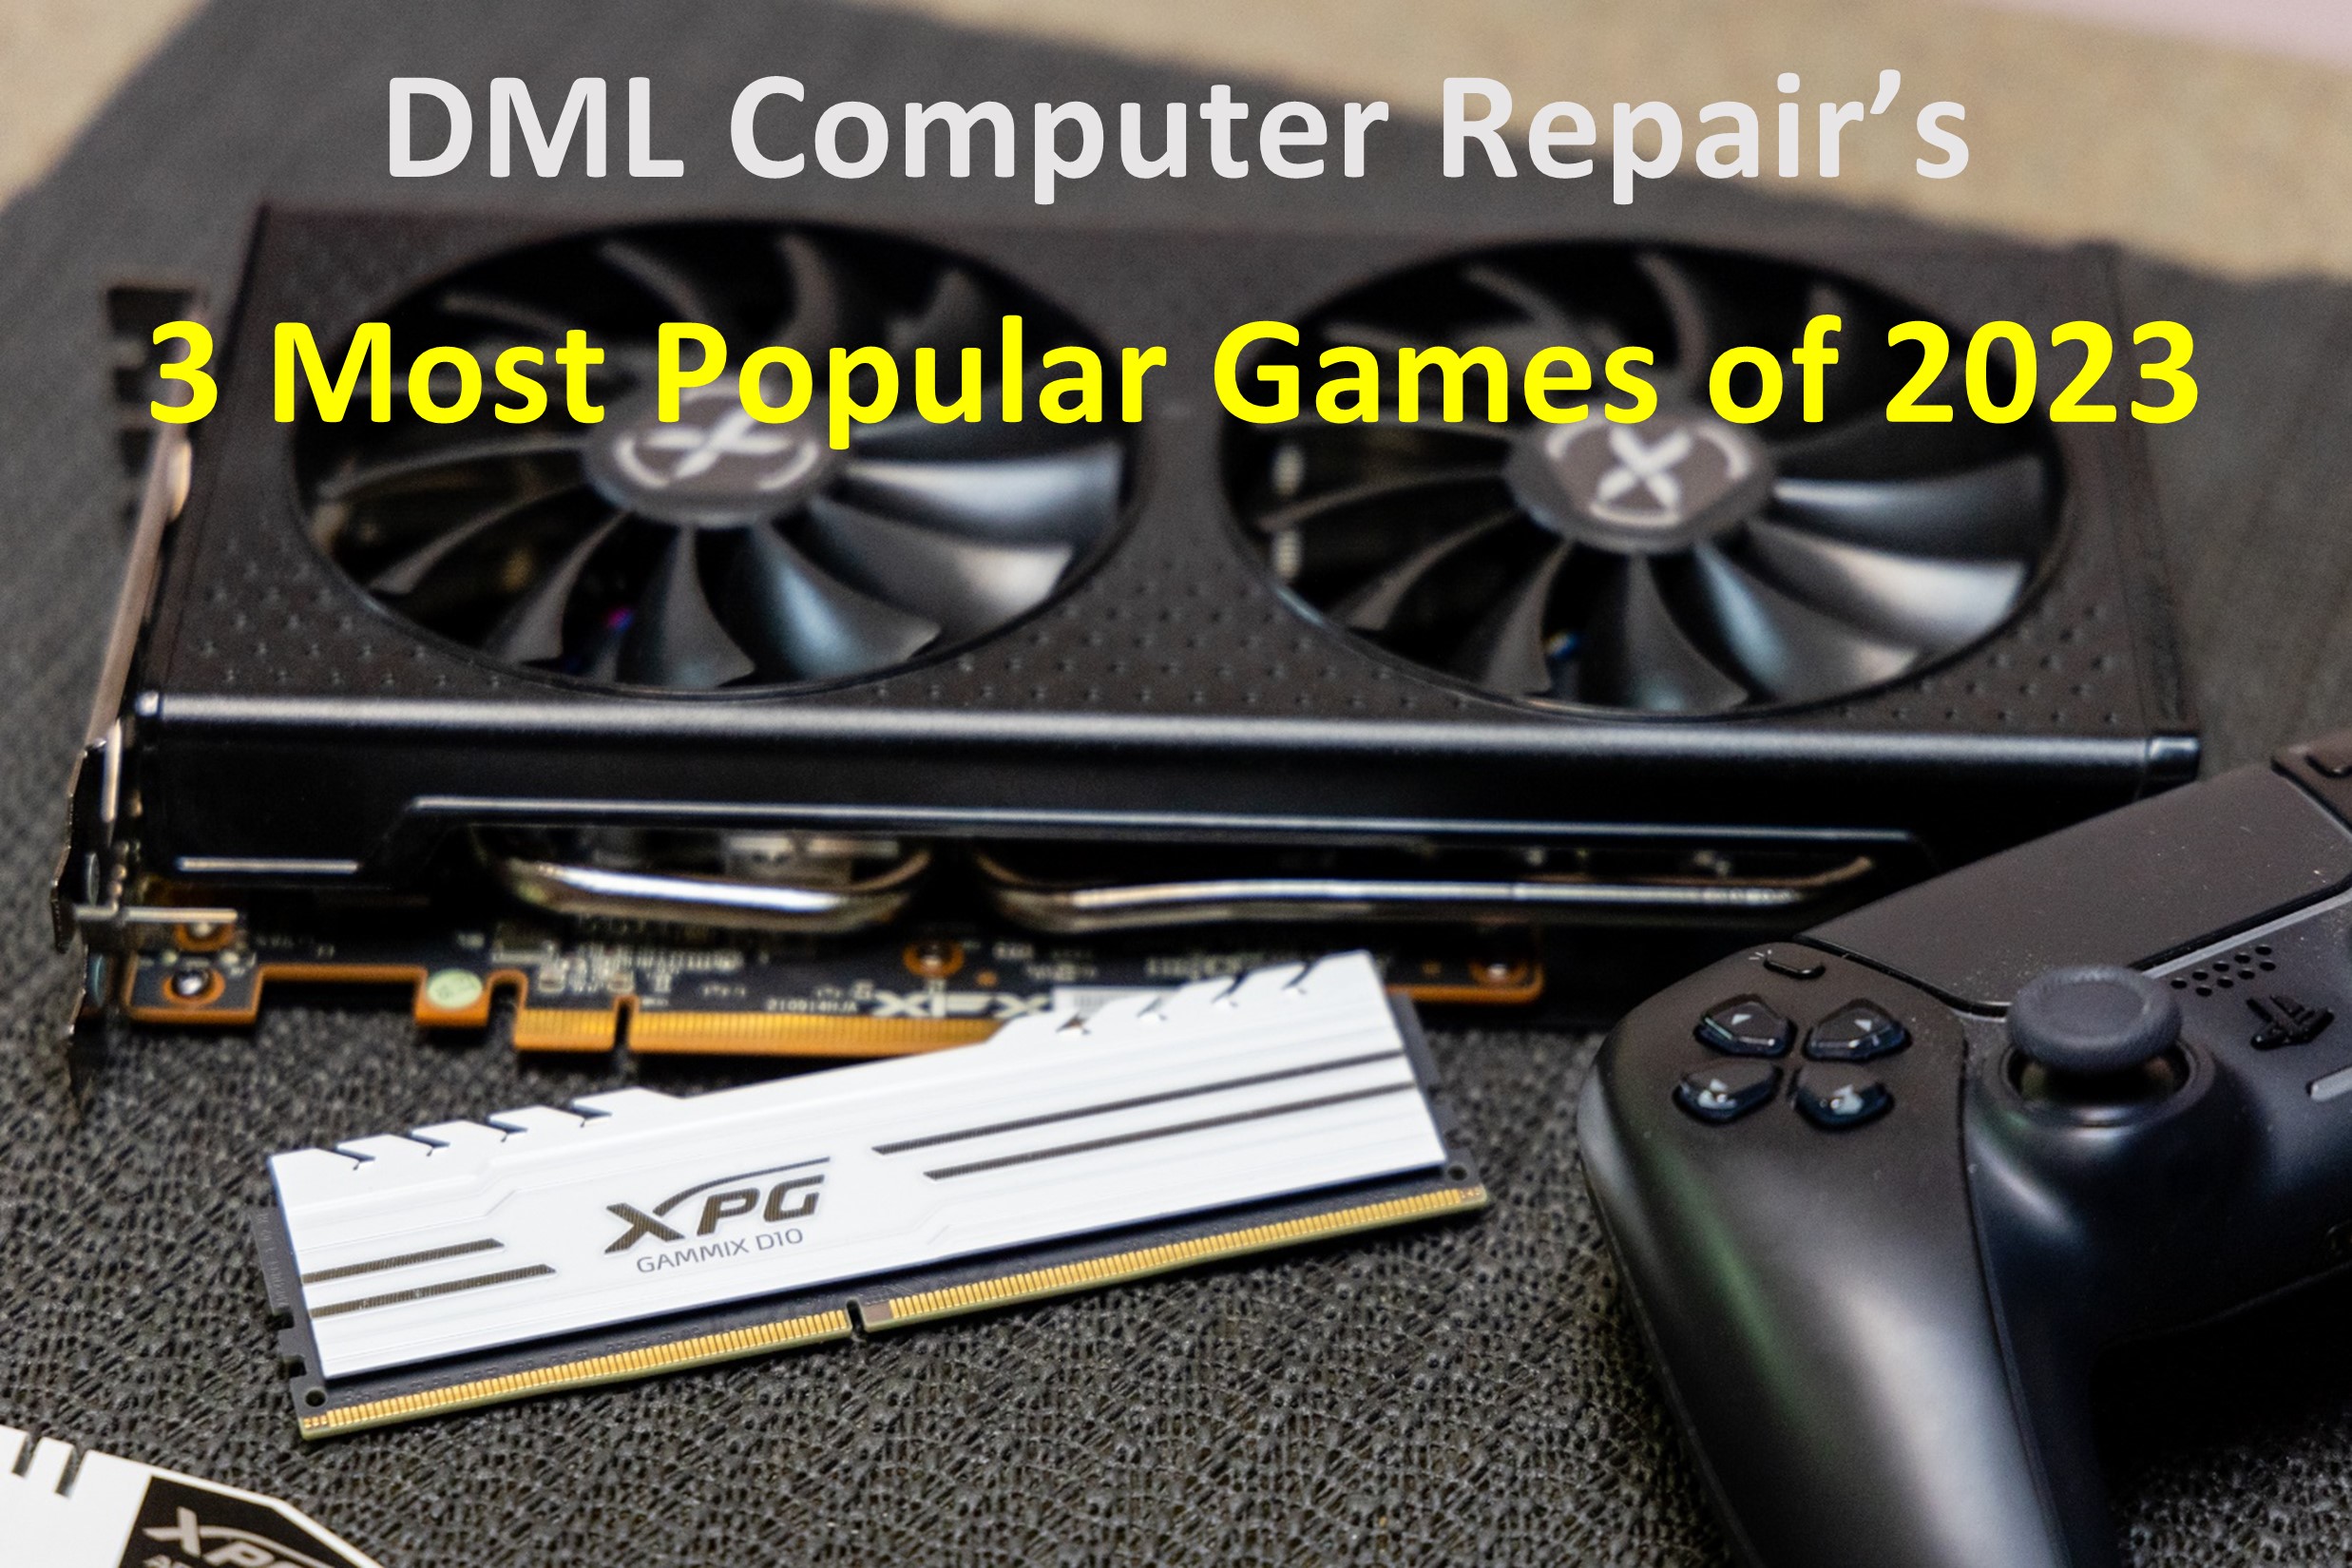 Computer Repair 3 most popular games